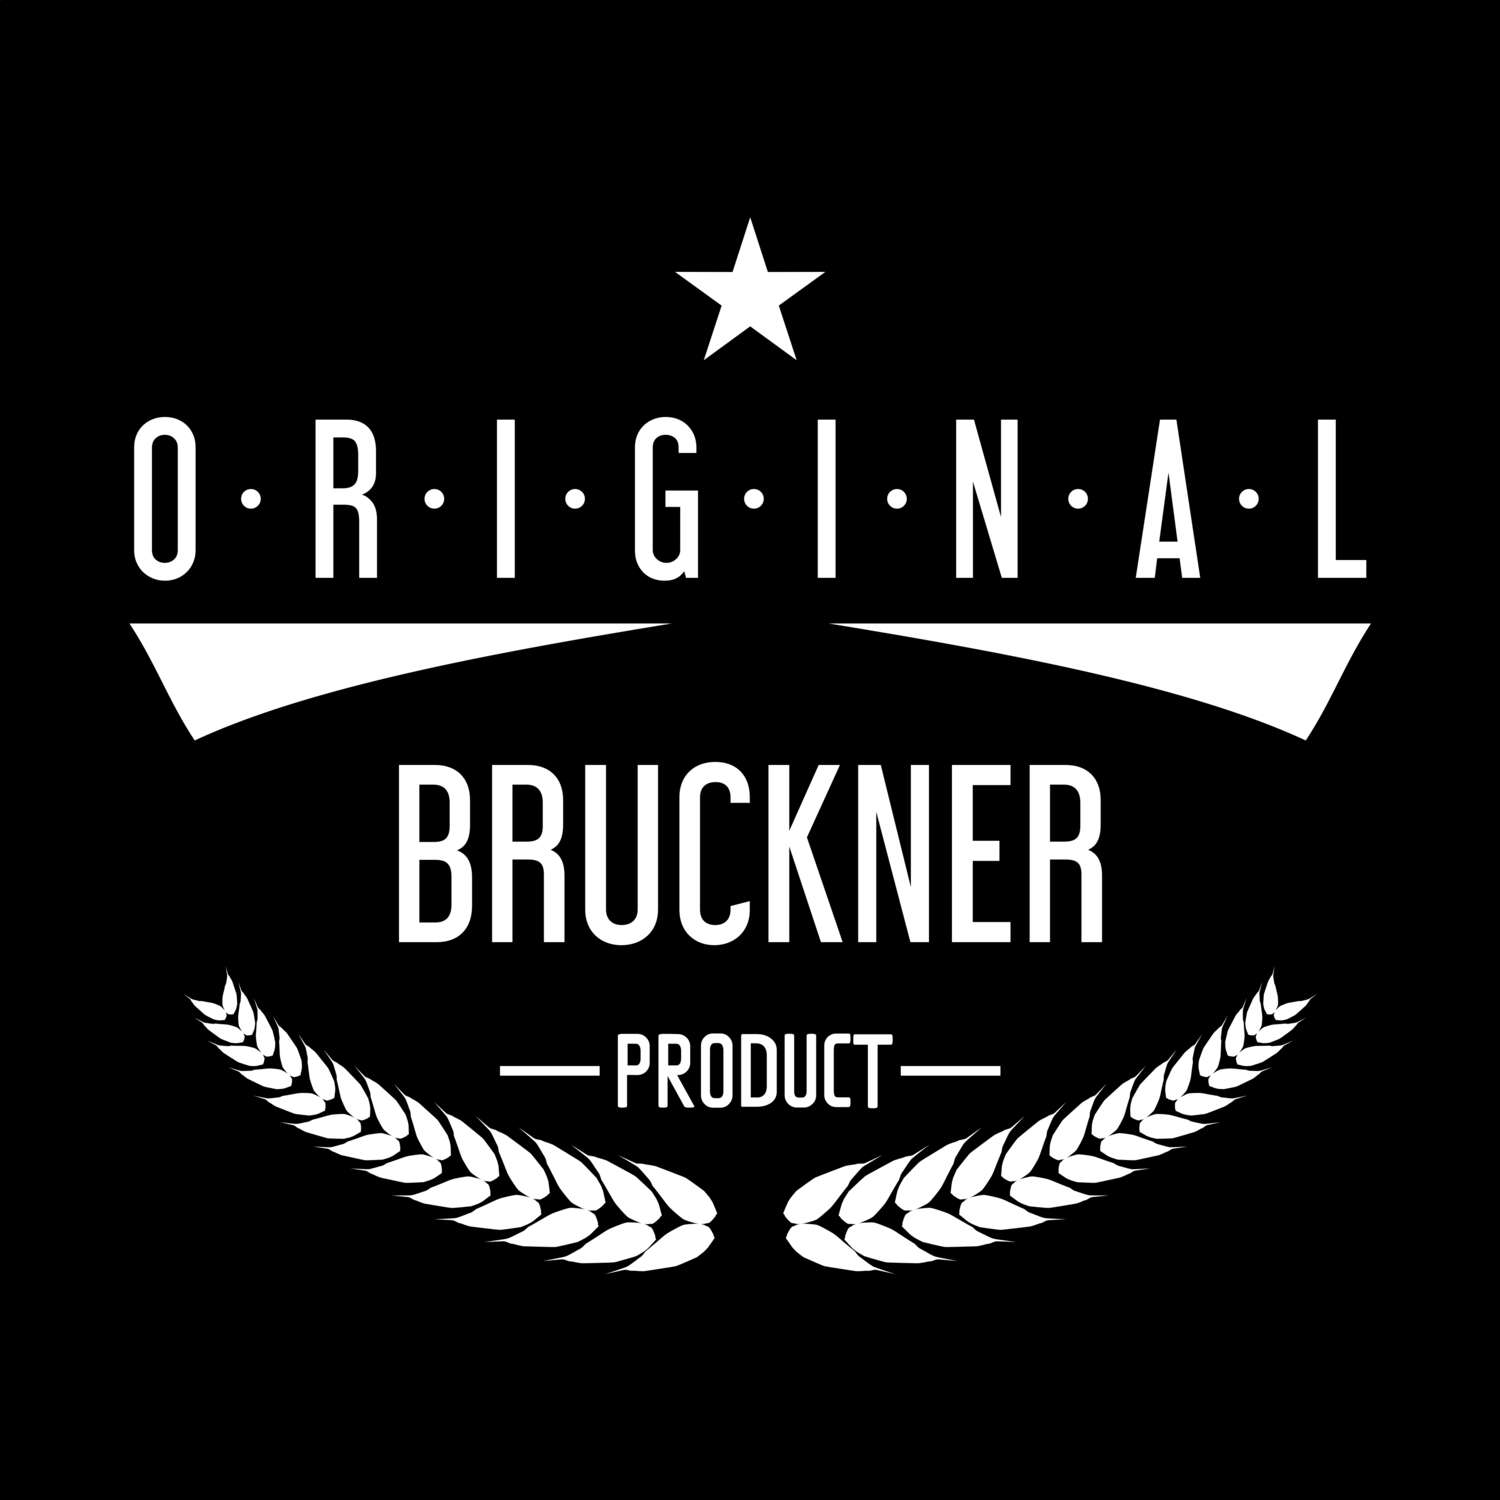 Bruckner T-Shirt »Original Product«